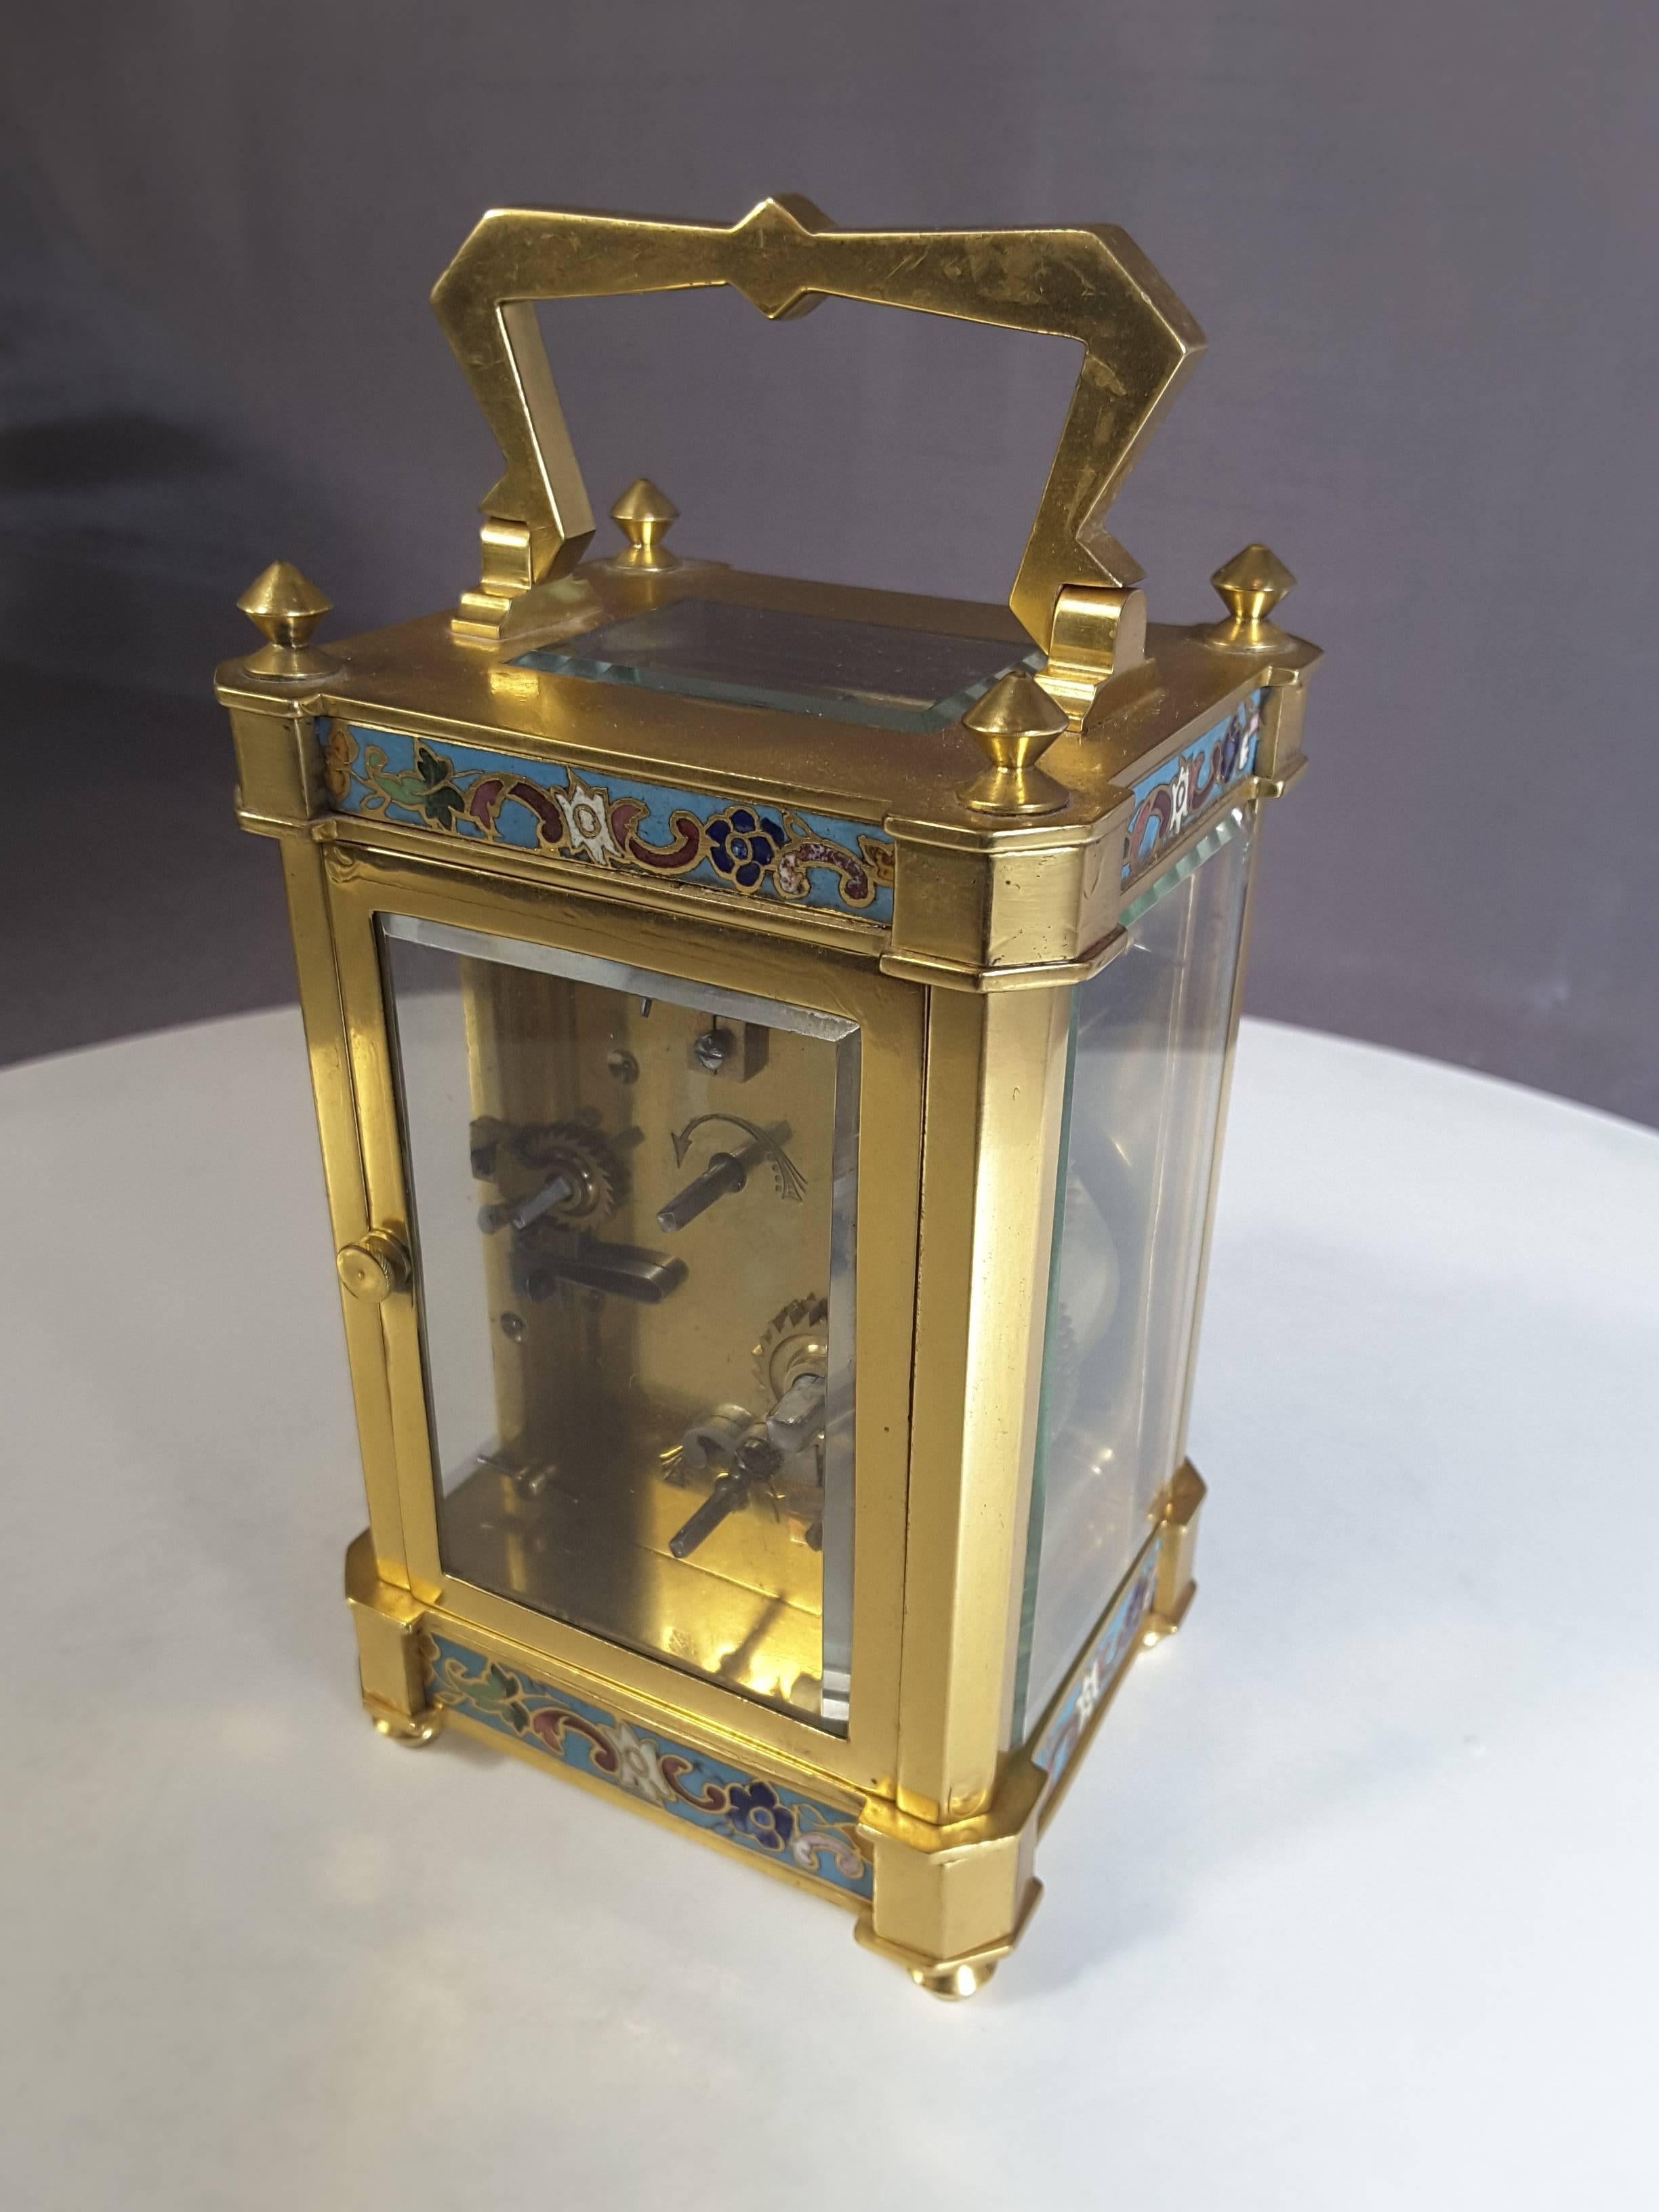 Edwardian French Carriage Alarm Clock with Champlevé  Decoration, Gilt Brass Case